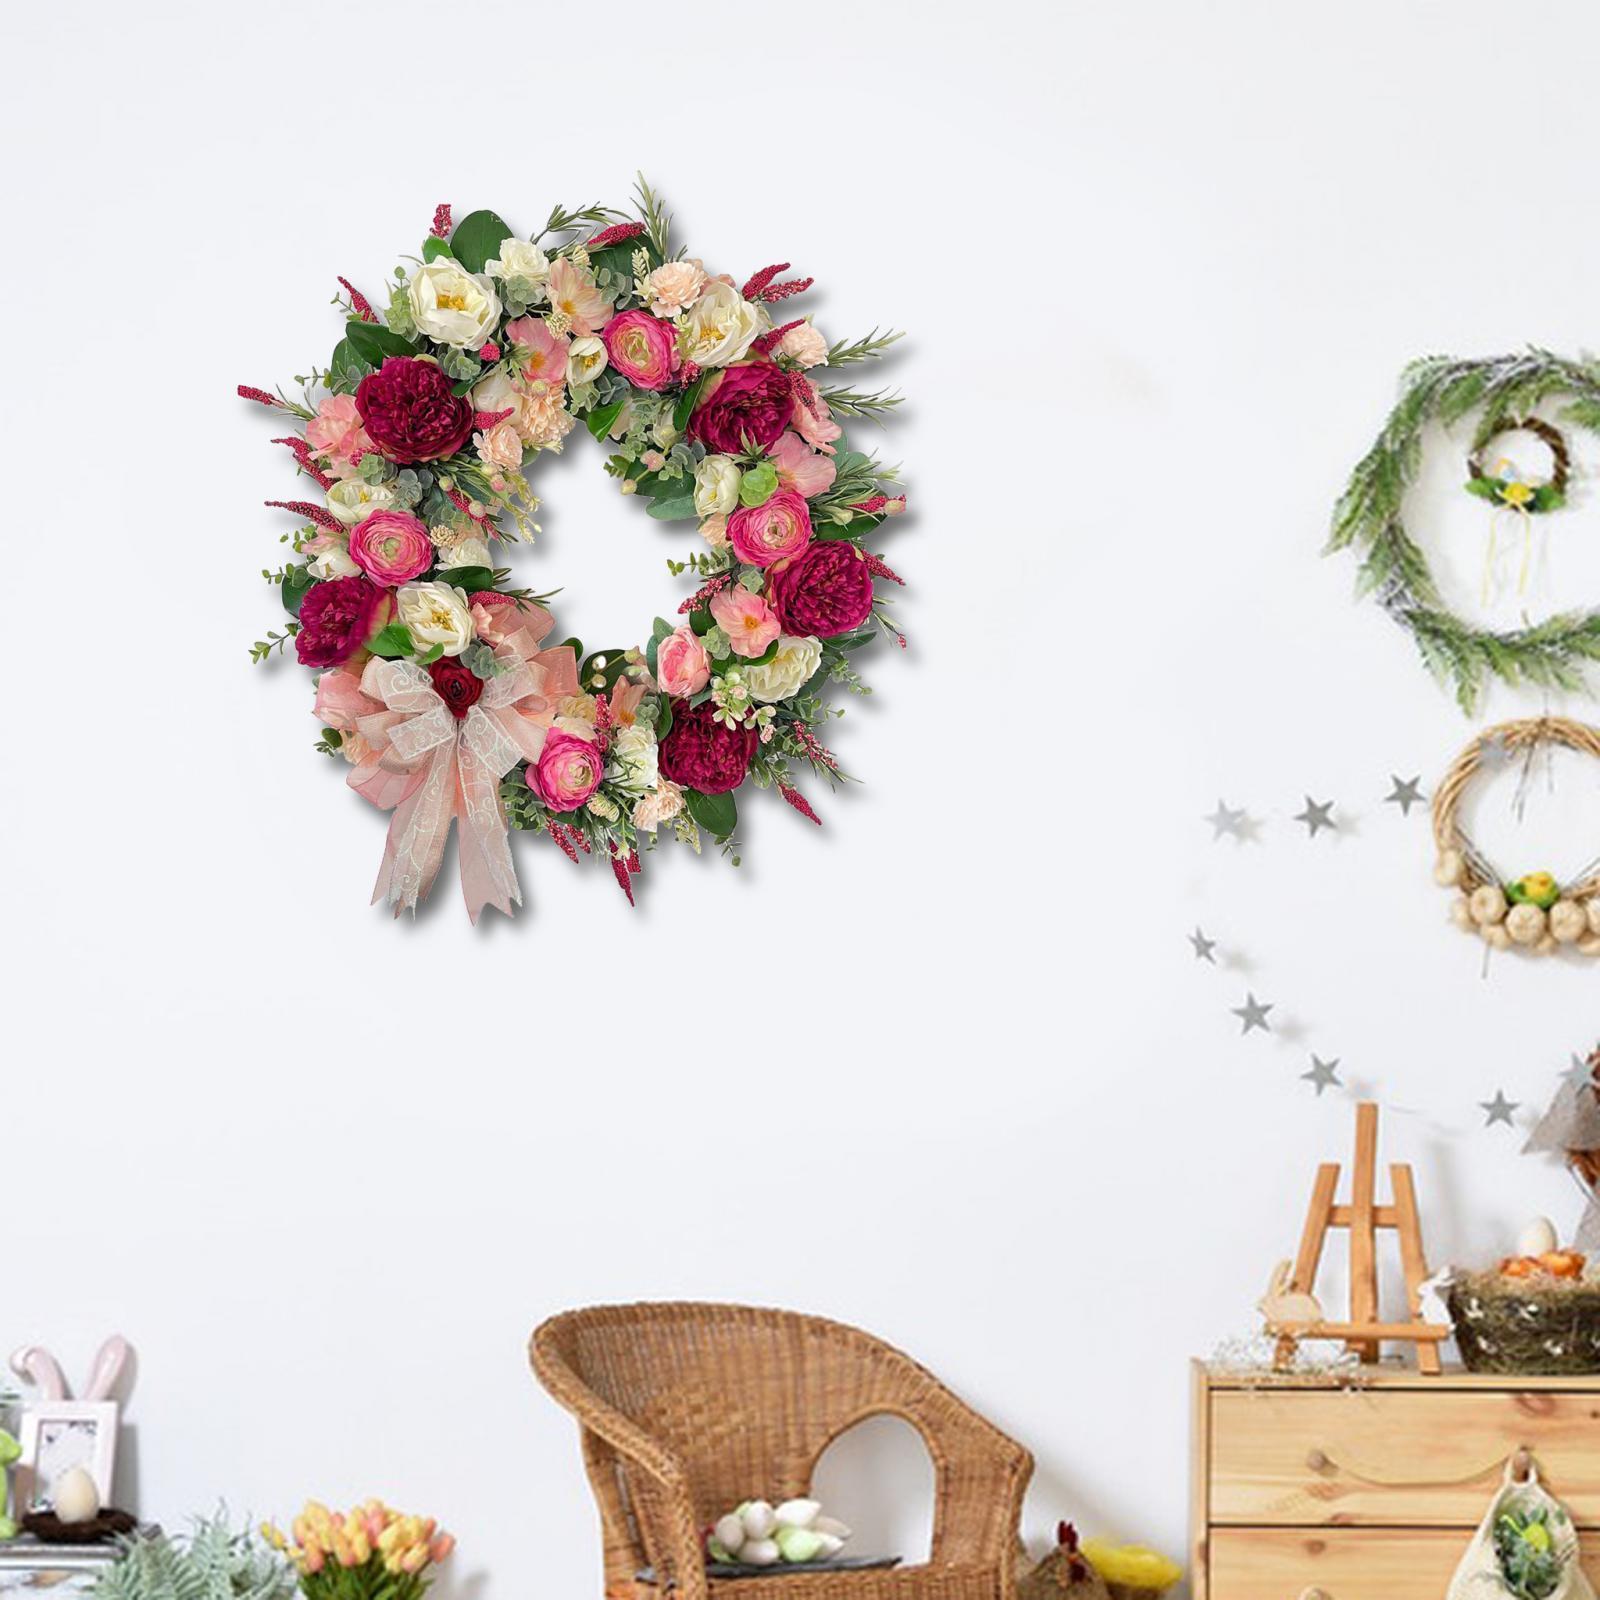 Romantic Door Flower Wreath, Floral Indoor Wreath, Faux Flower Ornaments ,Hanging Spring Wreath for Home Wedding, Front Doors Shop Windows Party